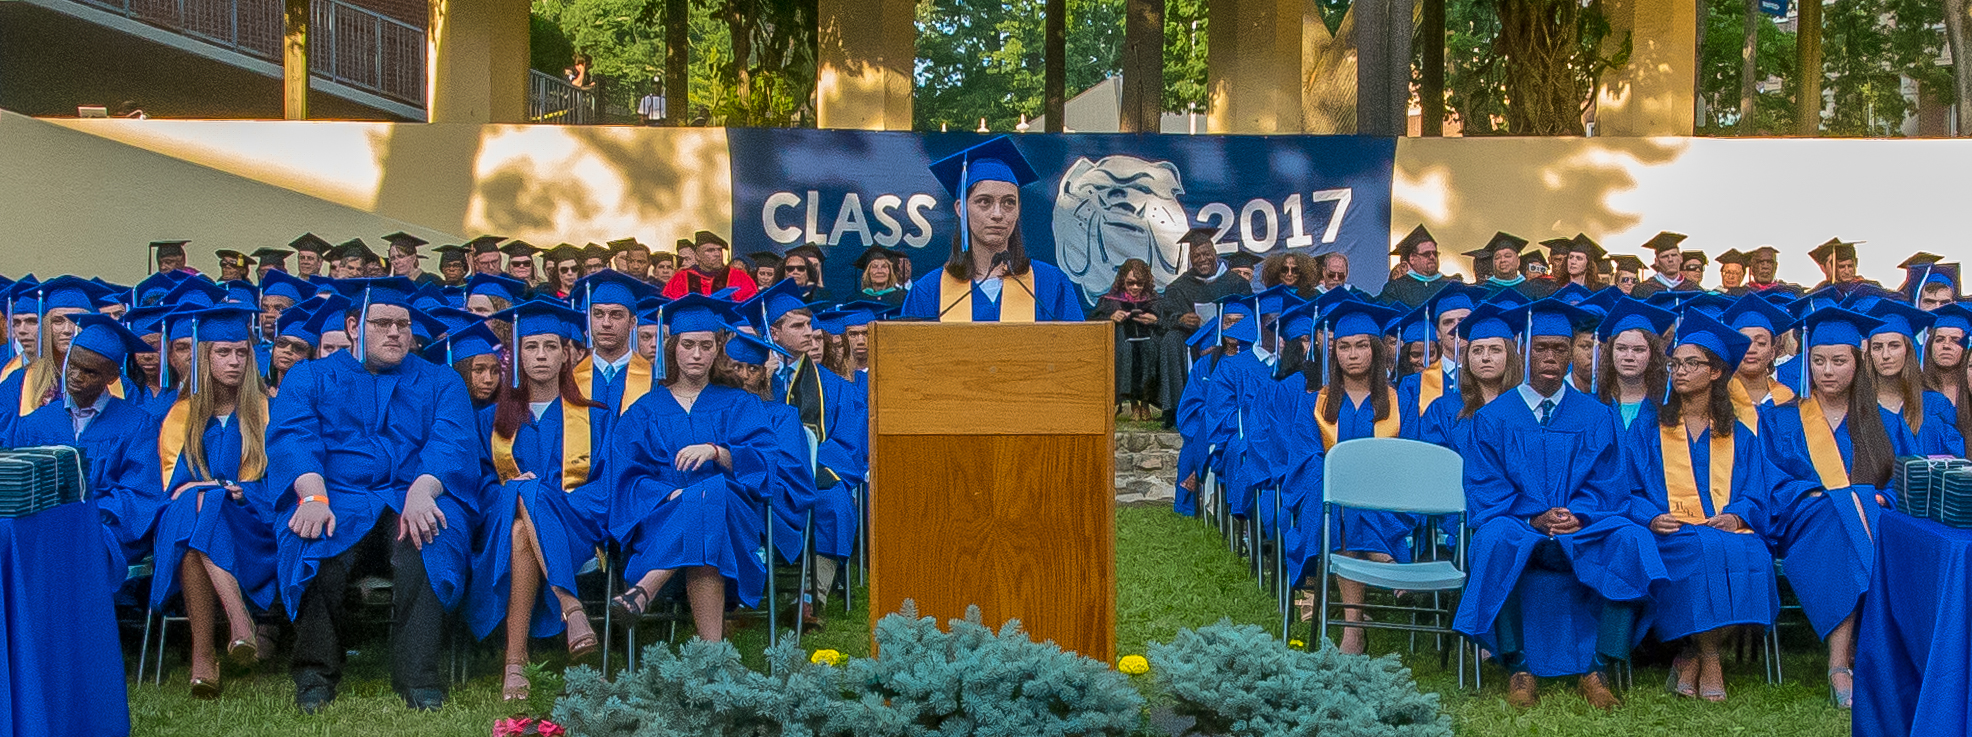 Cristi Kennedy addressing her fellow graduates. Photo by Adam Anik for The Montclair Dispatch.